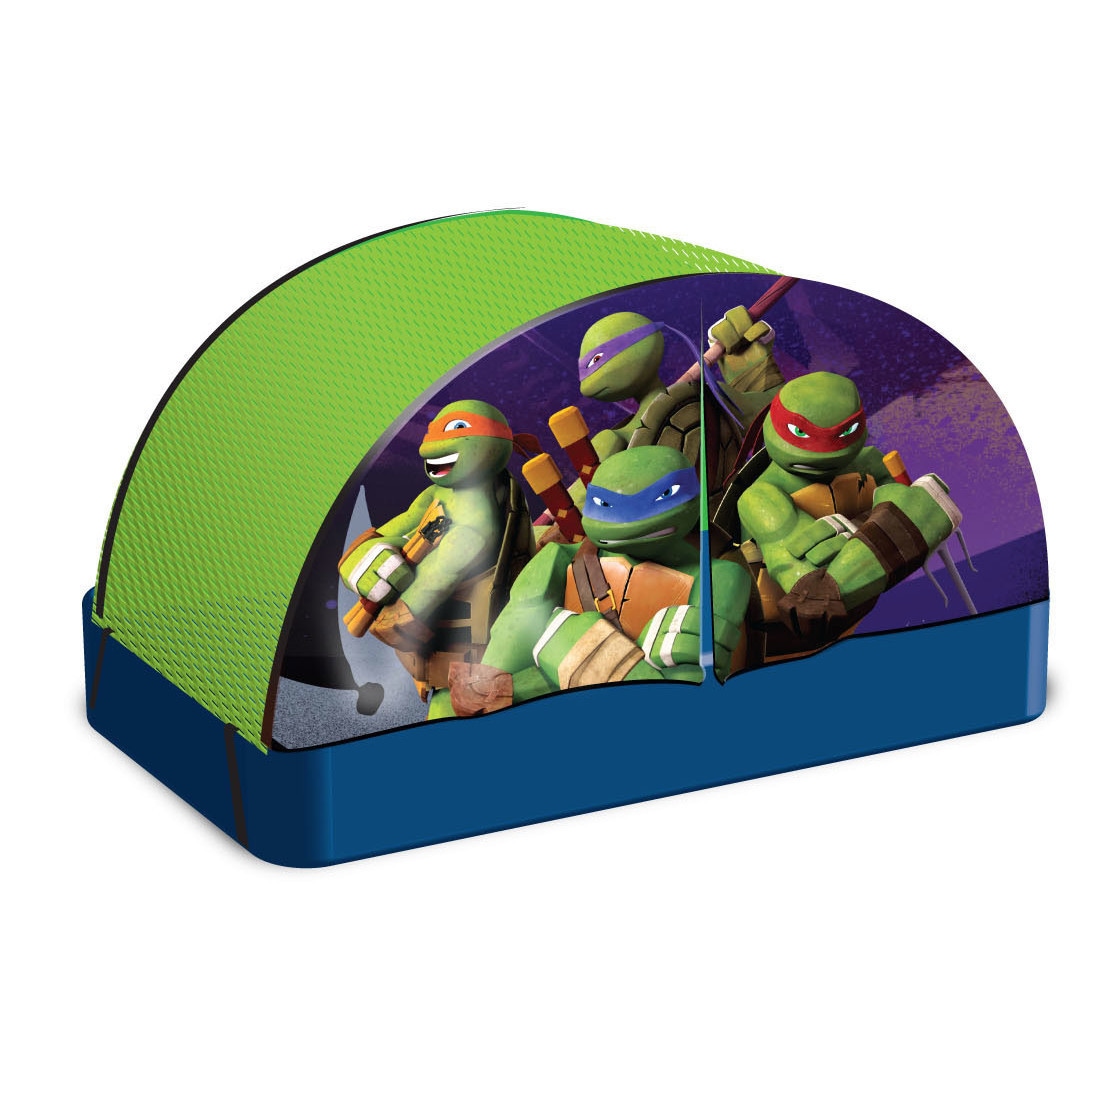 https://ak1.ostkcdn.com/images/products/12590459/Teenage-Mutant-Ninja-Turtles-Green-Fabric-Childs-Bed-Tent-bae24f03-5240-407e-9113-9b42e969de4a.jpg